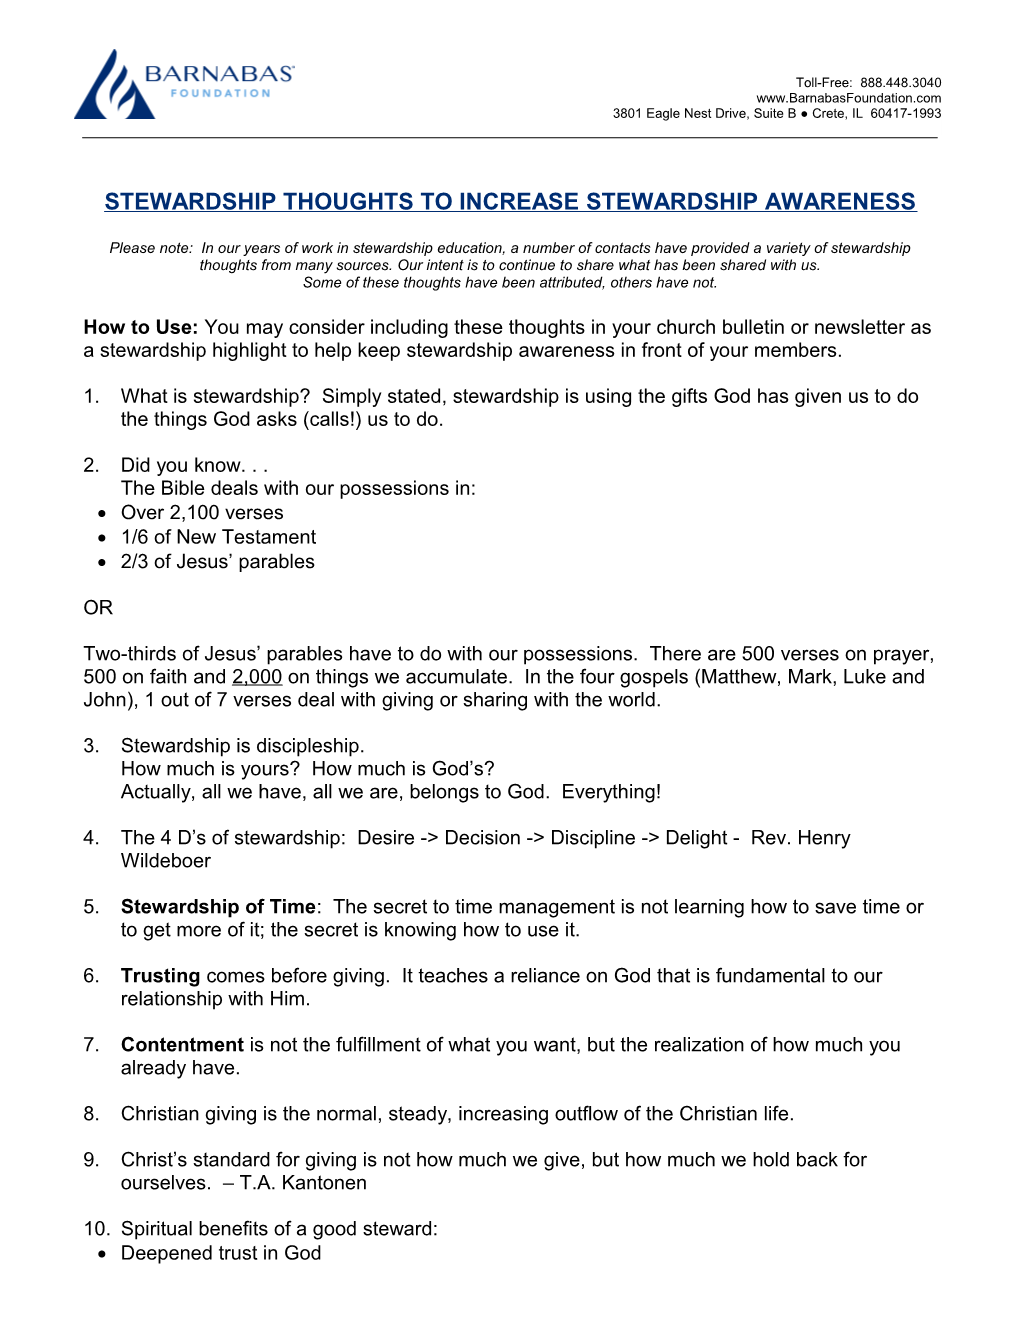 Stewardship Thoughts to Increase Stewardship Awareness